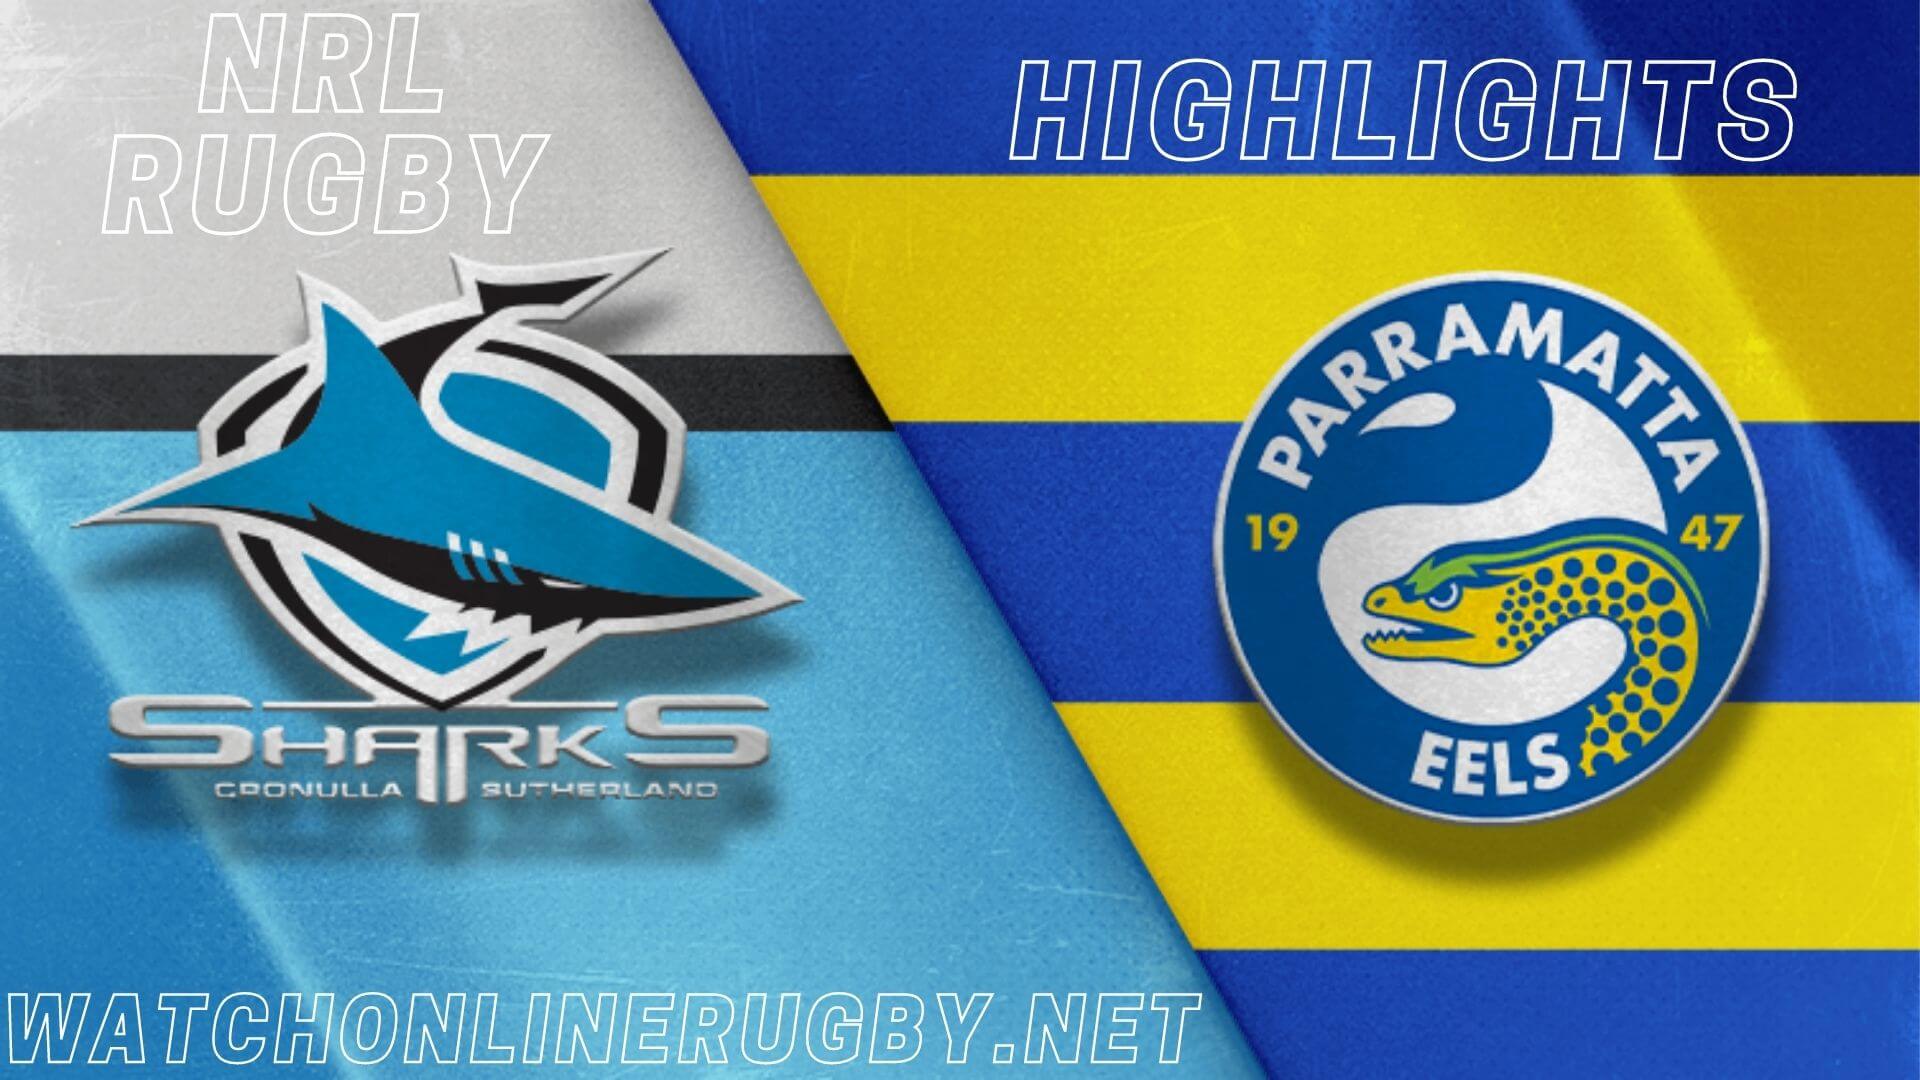 Sharks Vs Eels Highlights RD 2 NRL Rugby